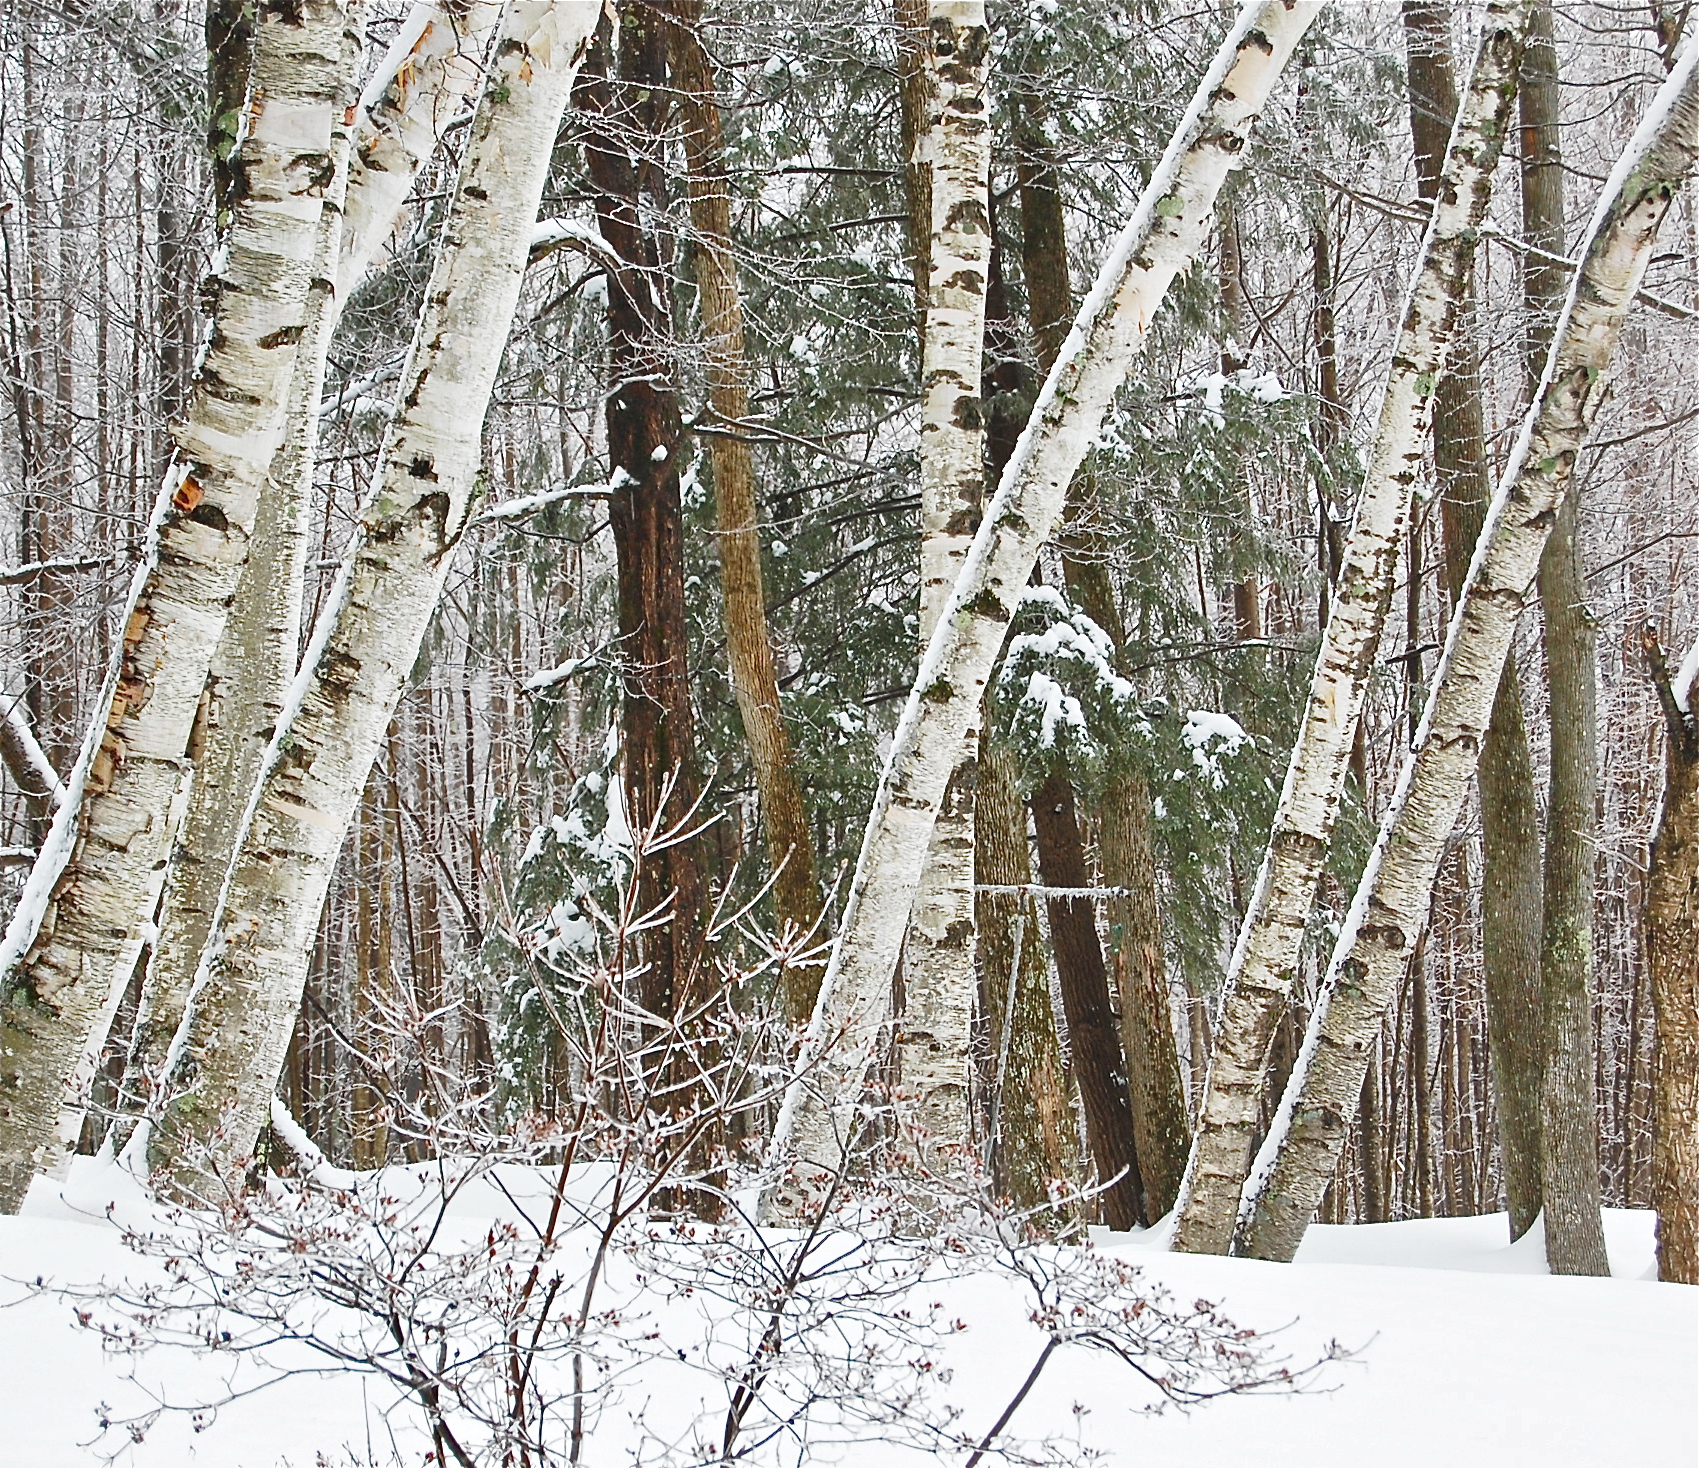 Winter Birch Trees | The Ripest Pics